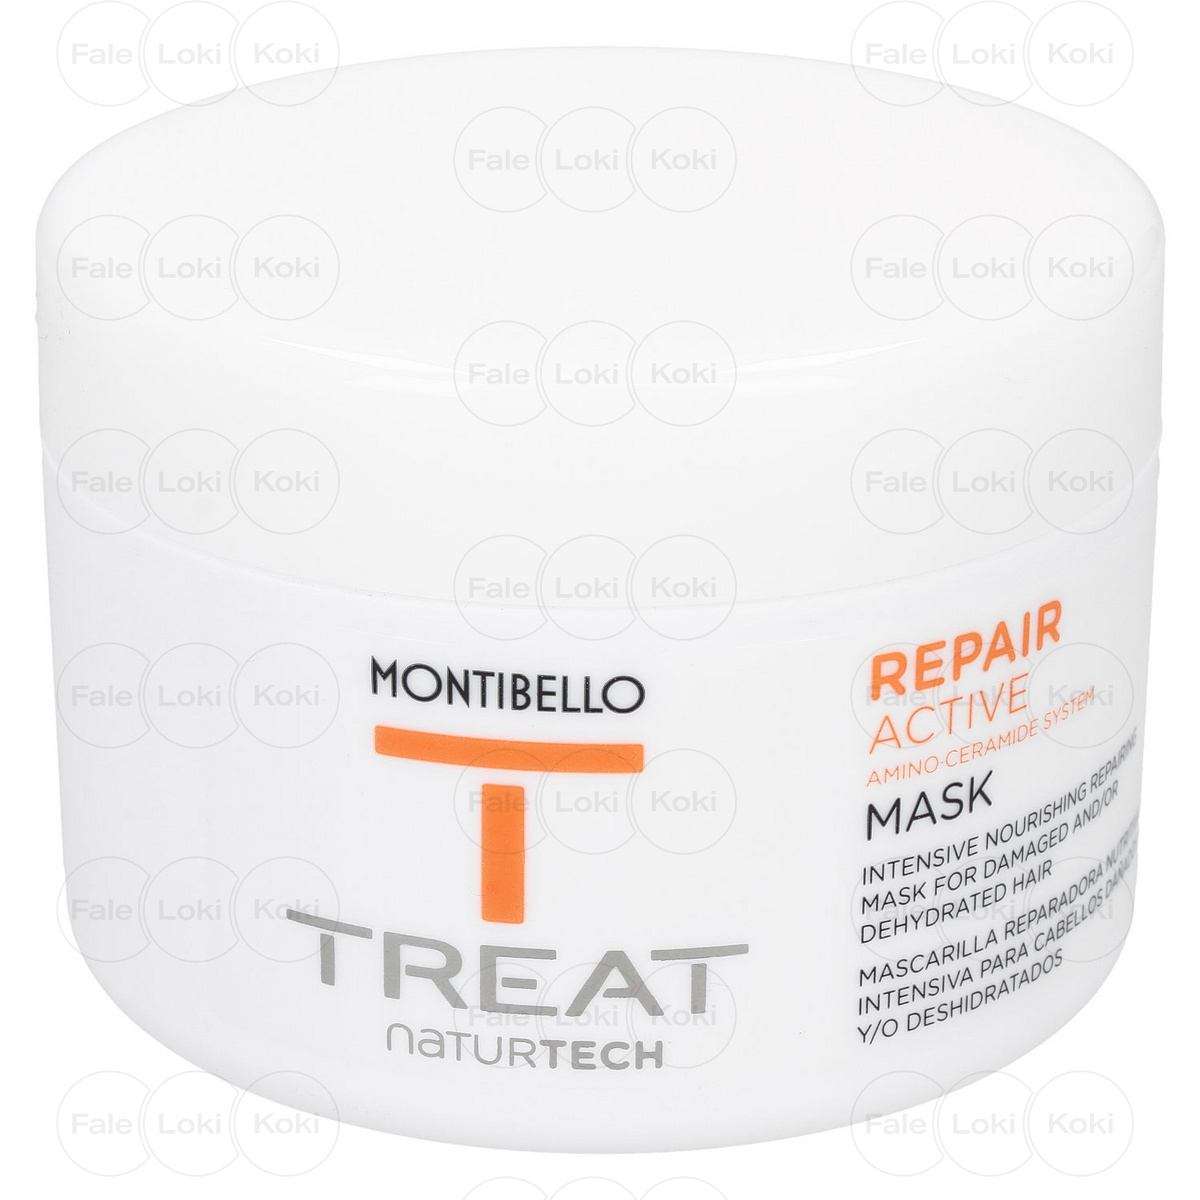 MONTIBELLO TREAT NATURTECH maska do włosów zniszczonych Repair Active 200 ml